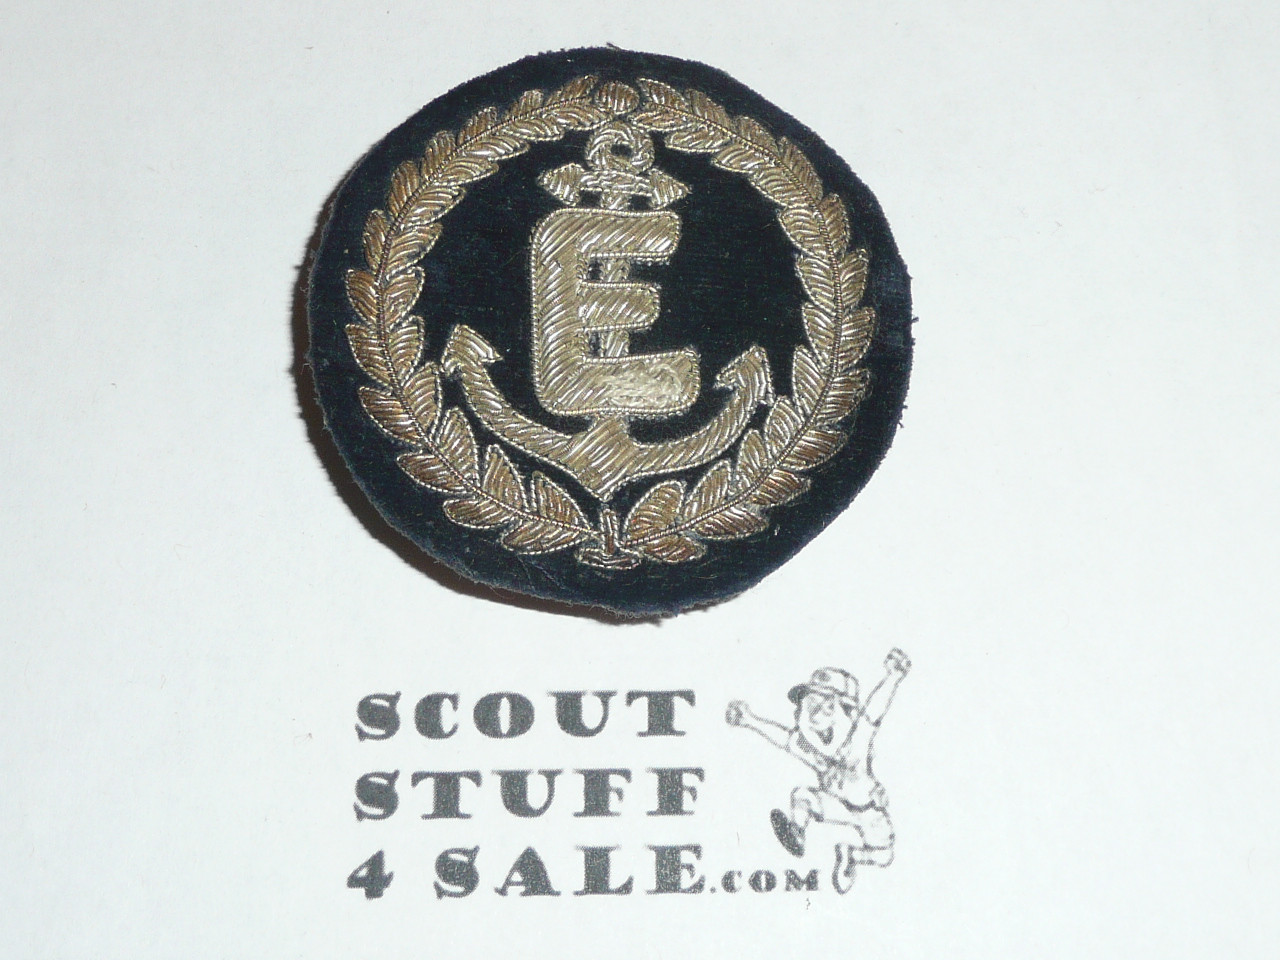 Boy Scout Sea Exploring Leader/Professional/Commissioner Blazer Crest Bullion, RARE Prototype varieties, Variety #3